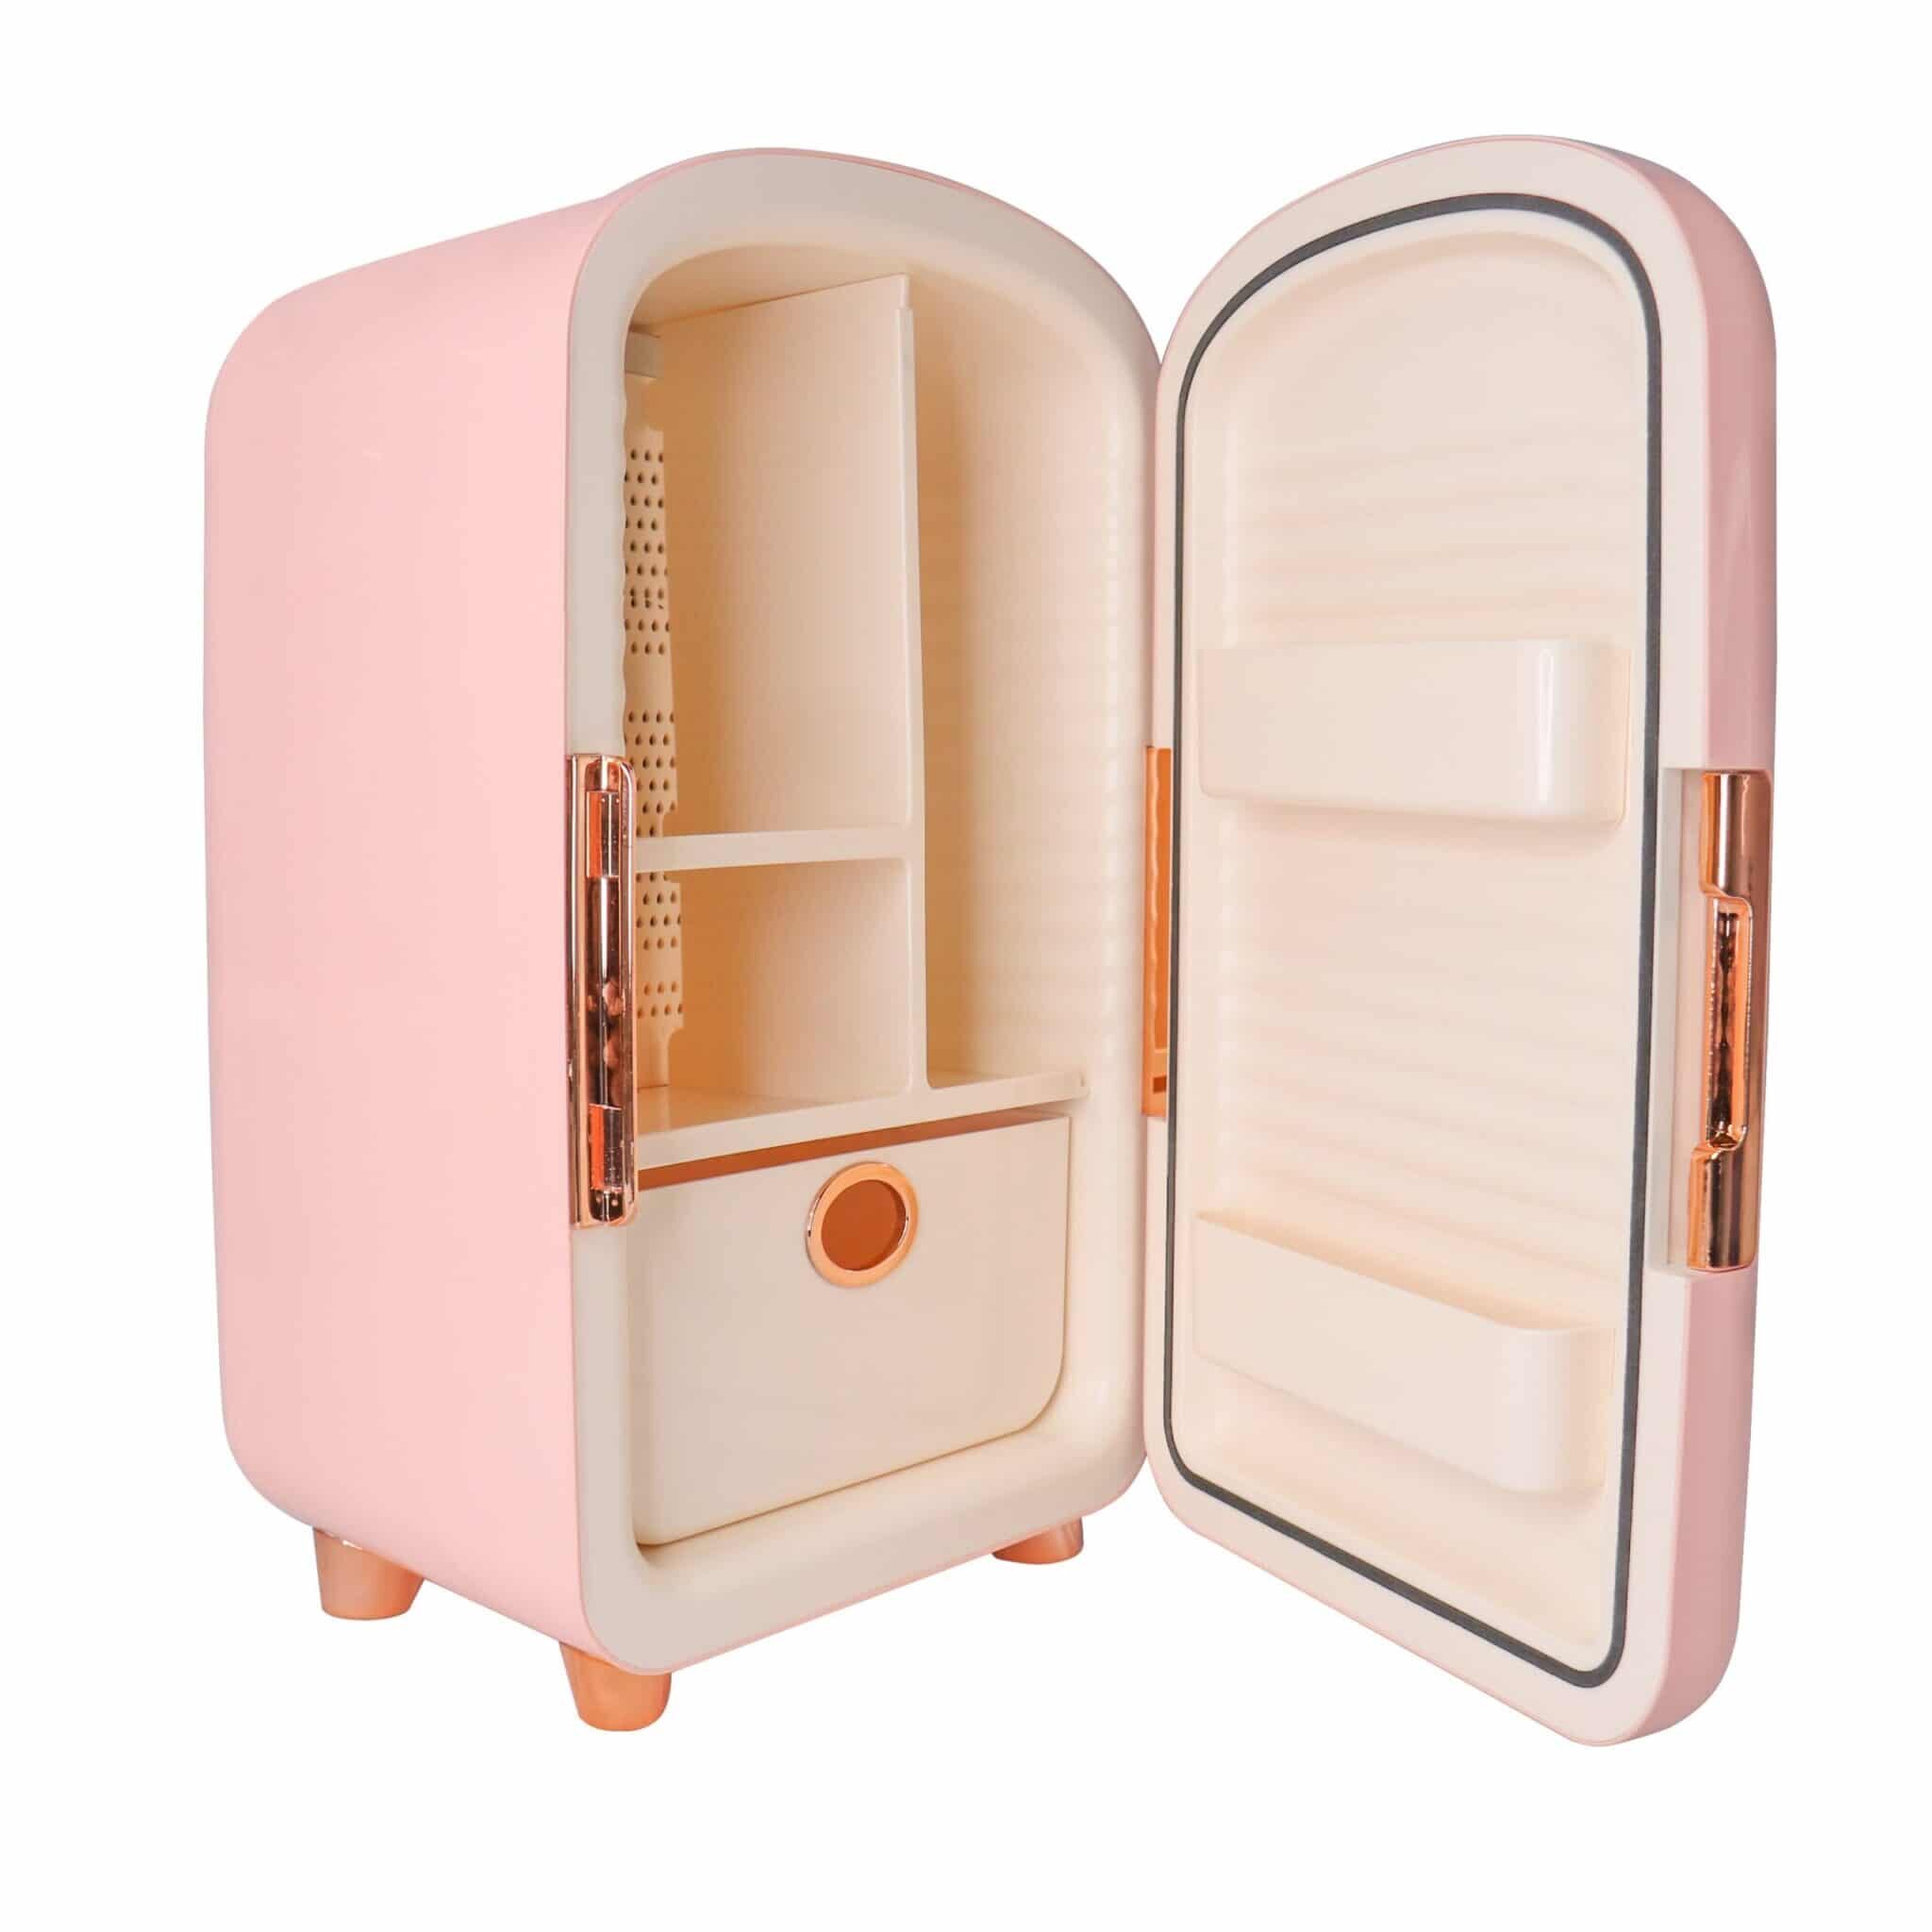 12L Luxury Mini Refrigerator